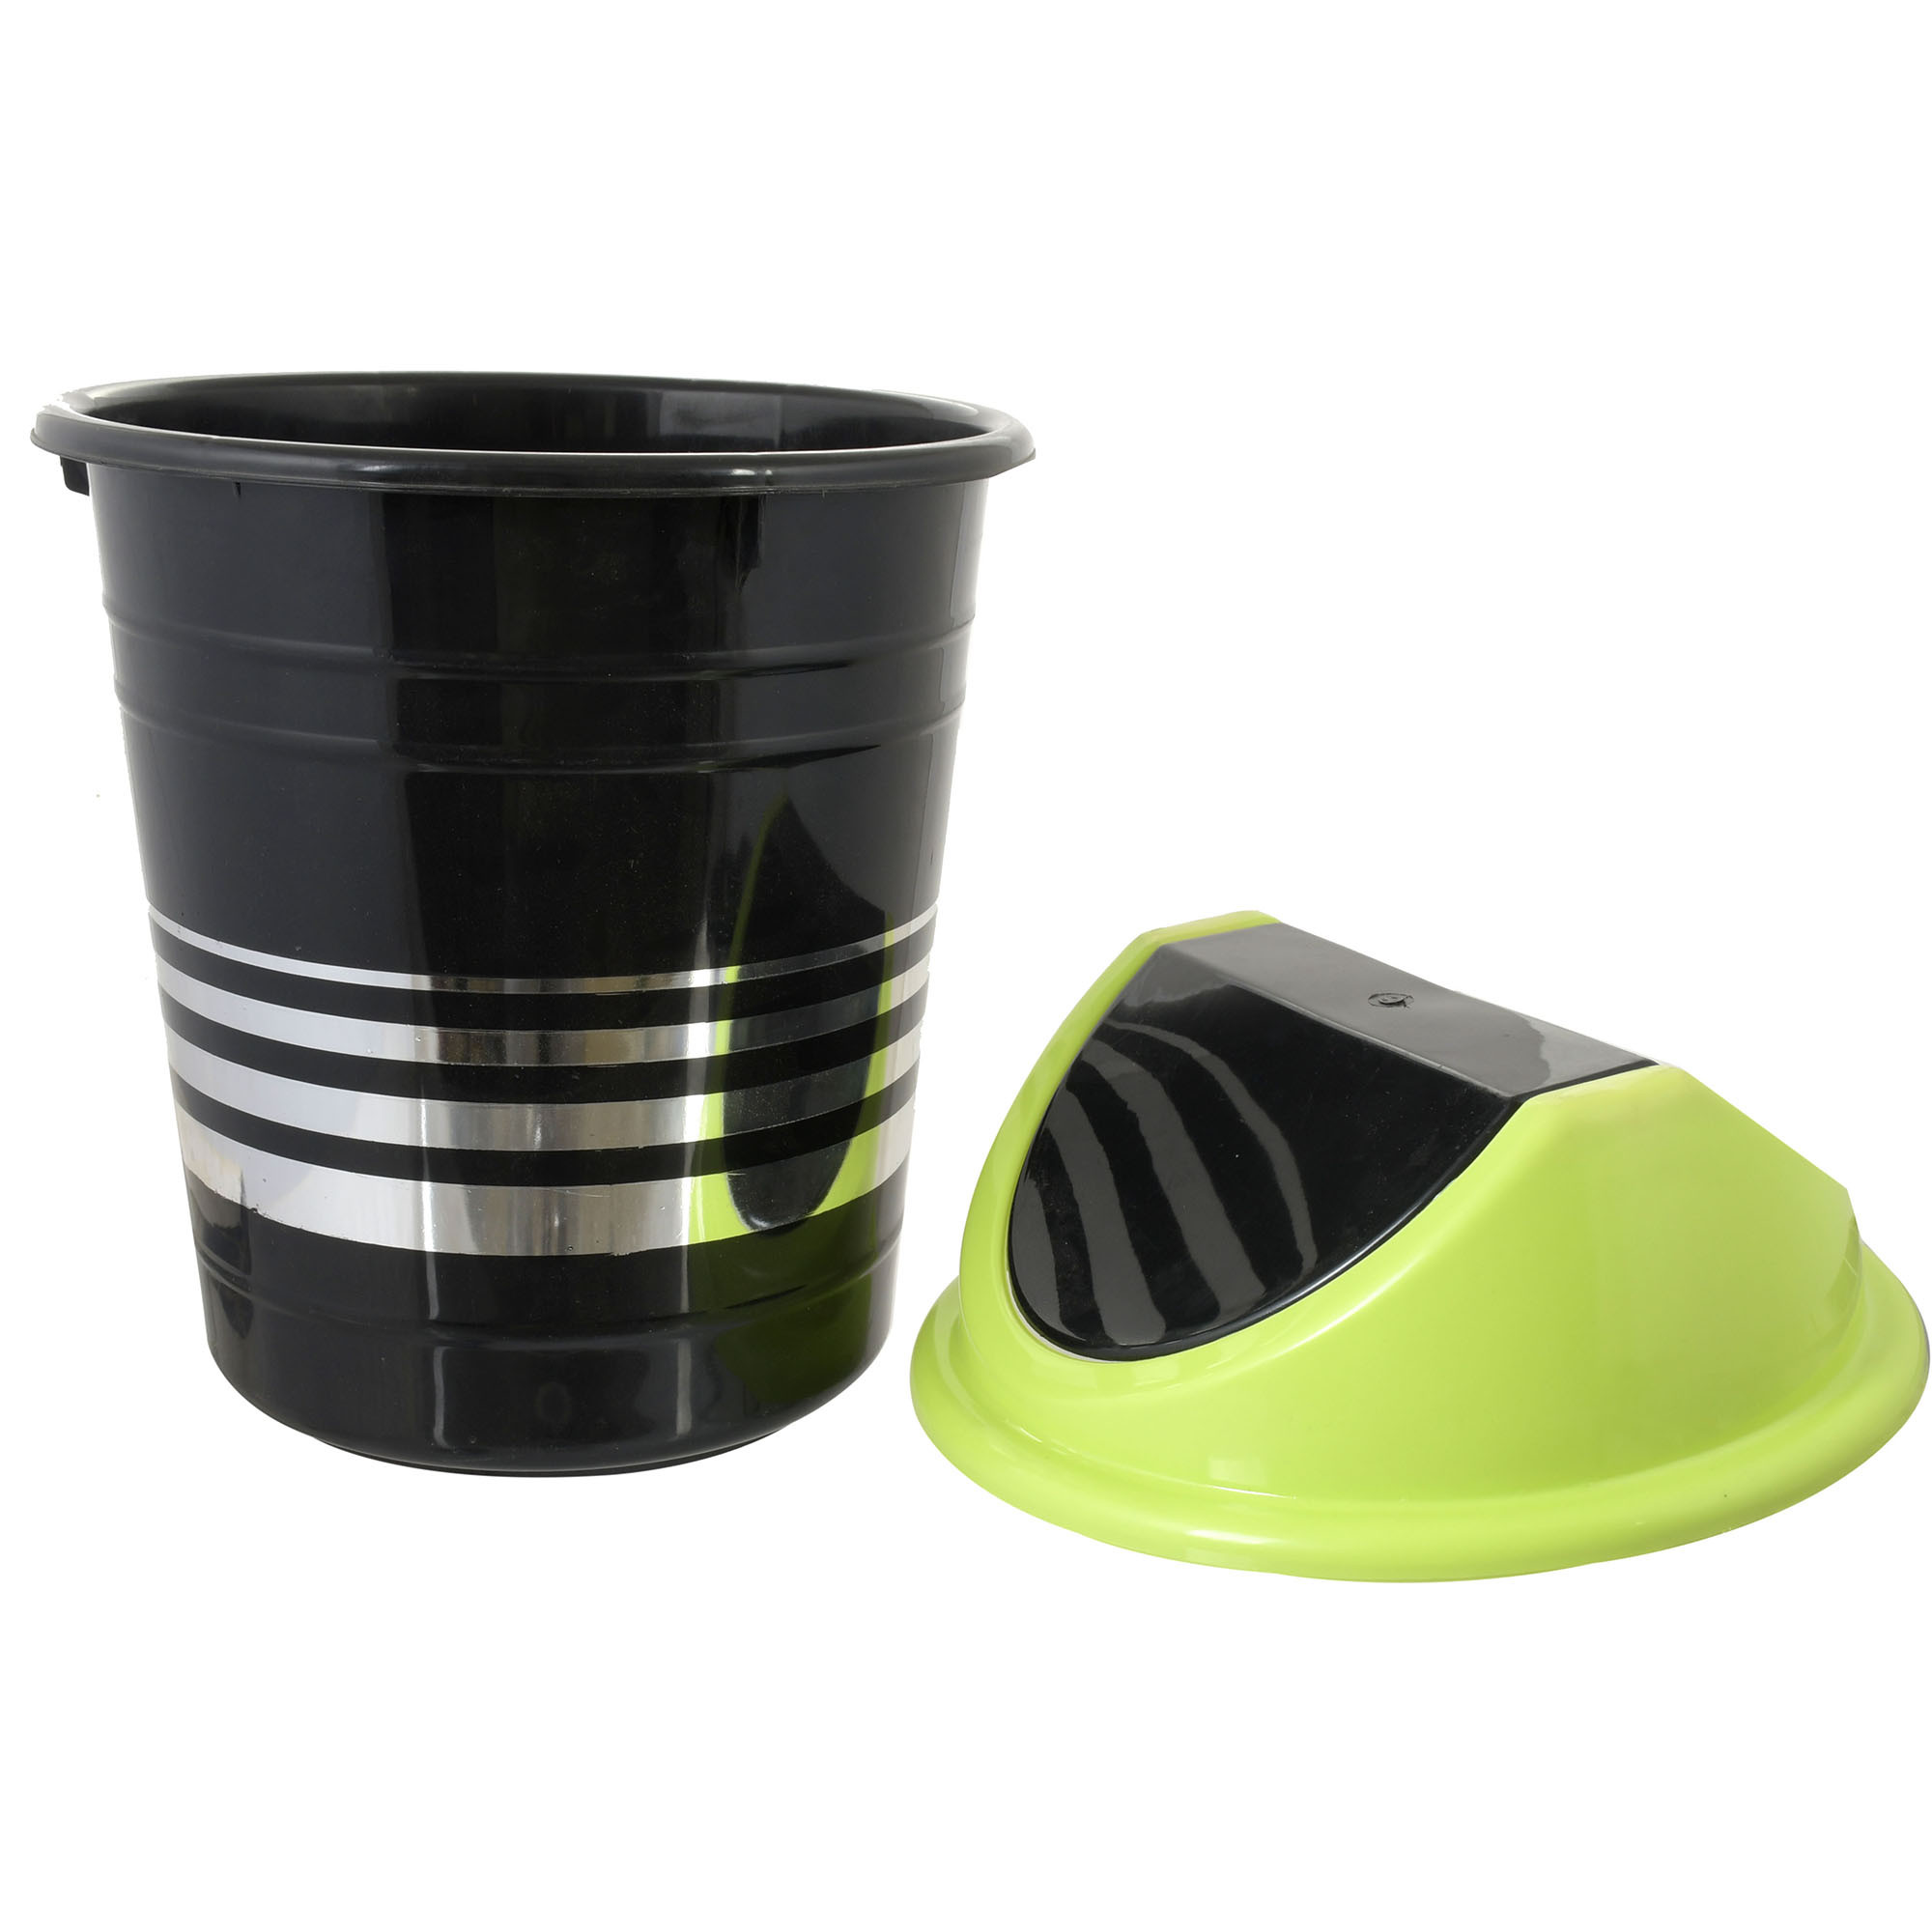 Kuber Industries Plastic 3 Pieces Medium Size Swing Dustbin/ Swing Garbage Bin/ Waste Bin, 10 Liters (Green & Pink & Yellow)